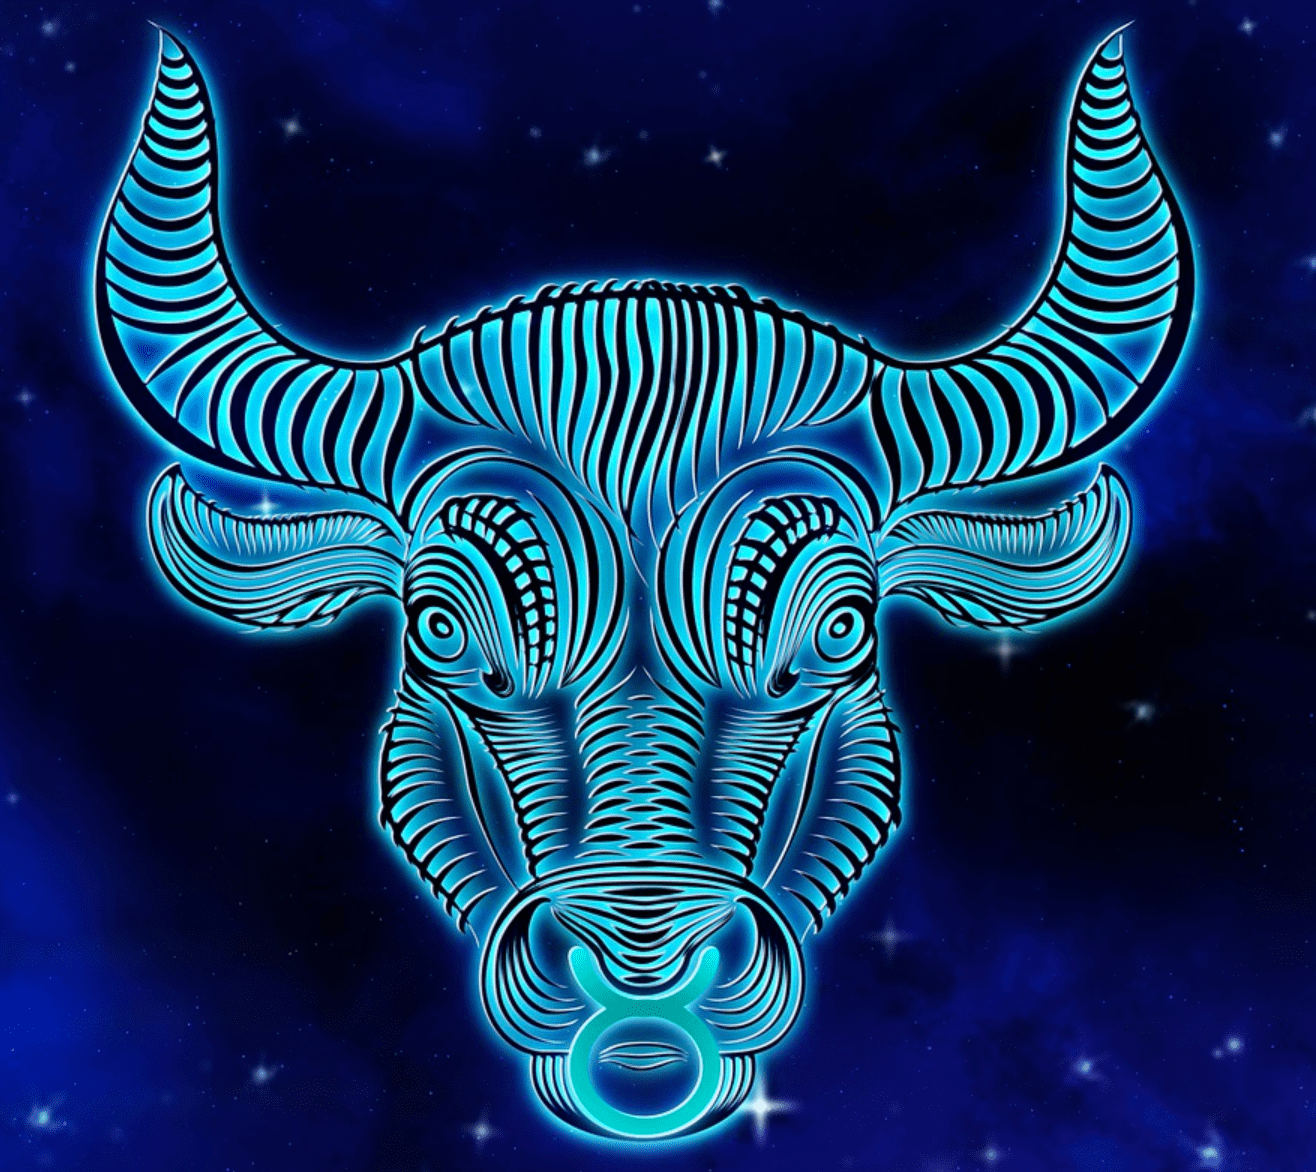 An illustration of the Taurus zodiac sign | Photo: Pixabay/Darkmoon_Art 